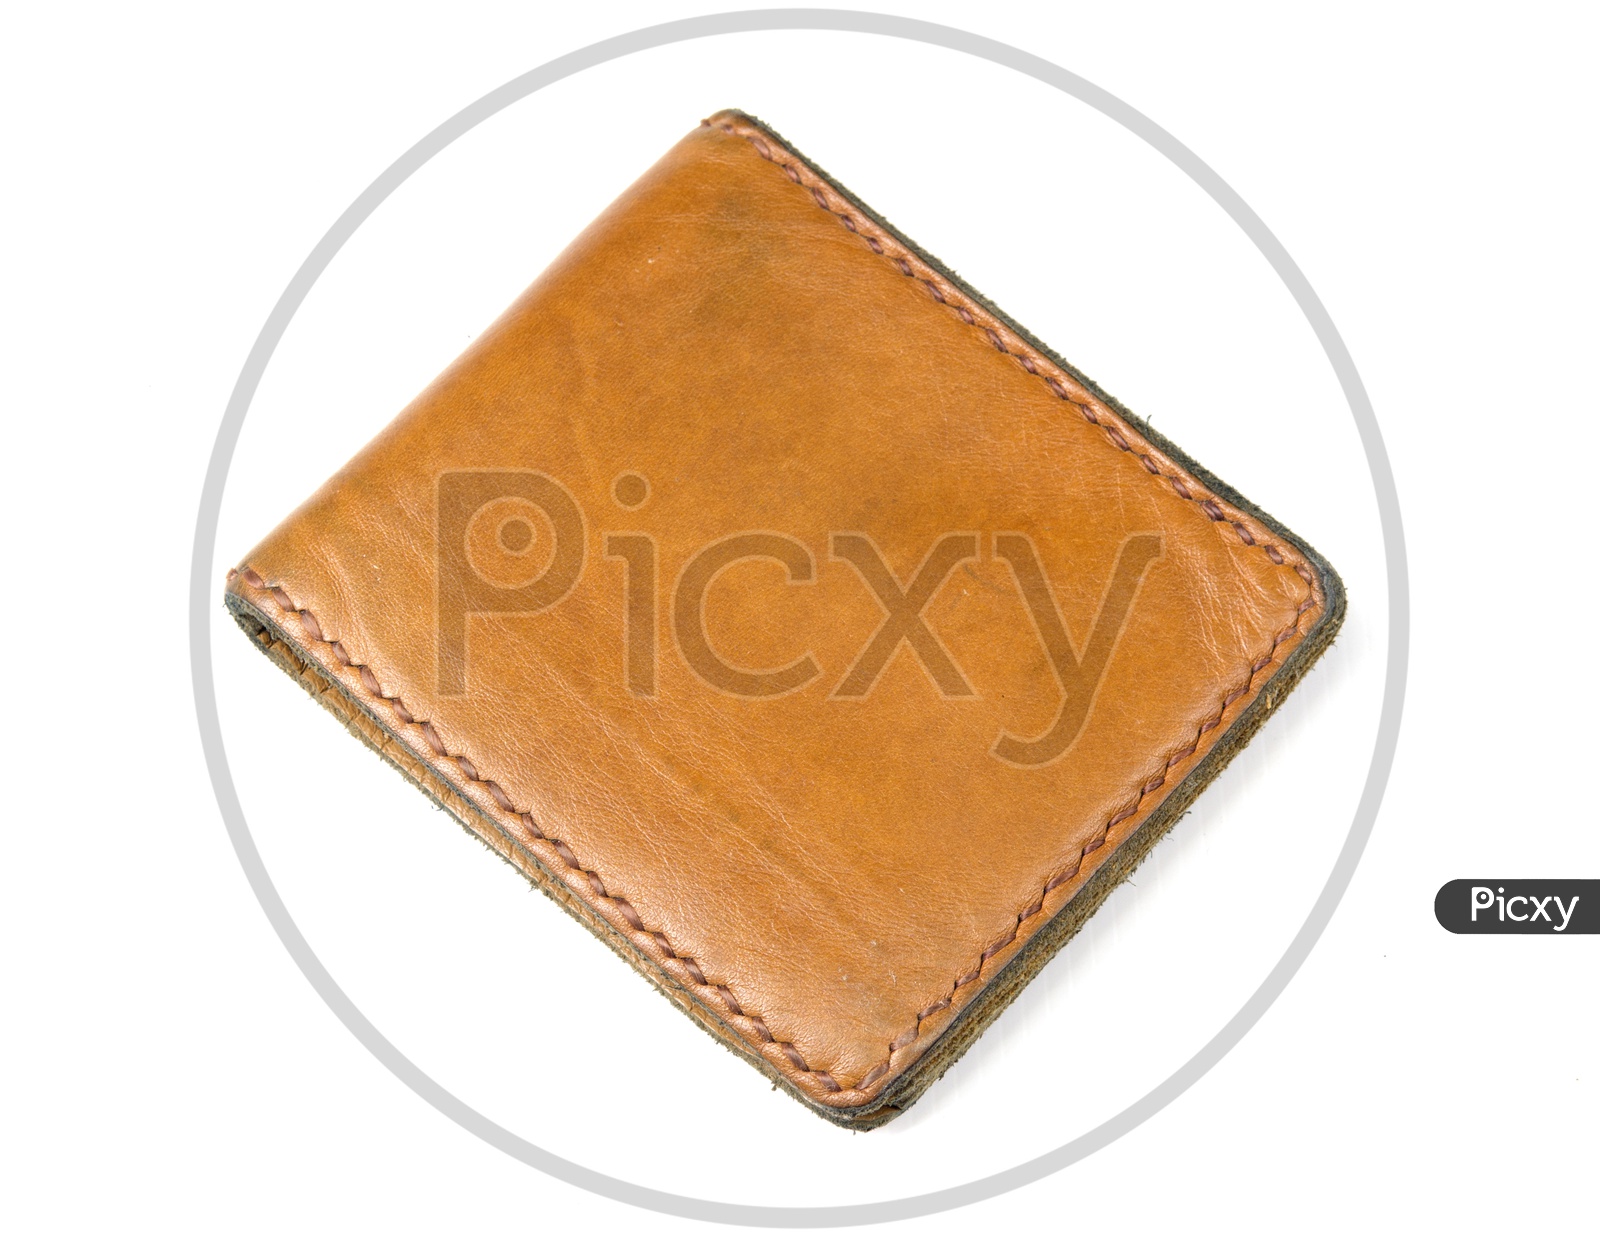 A Brown wallet